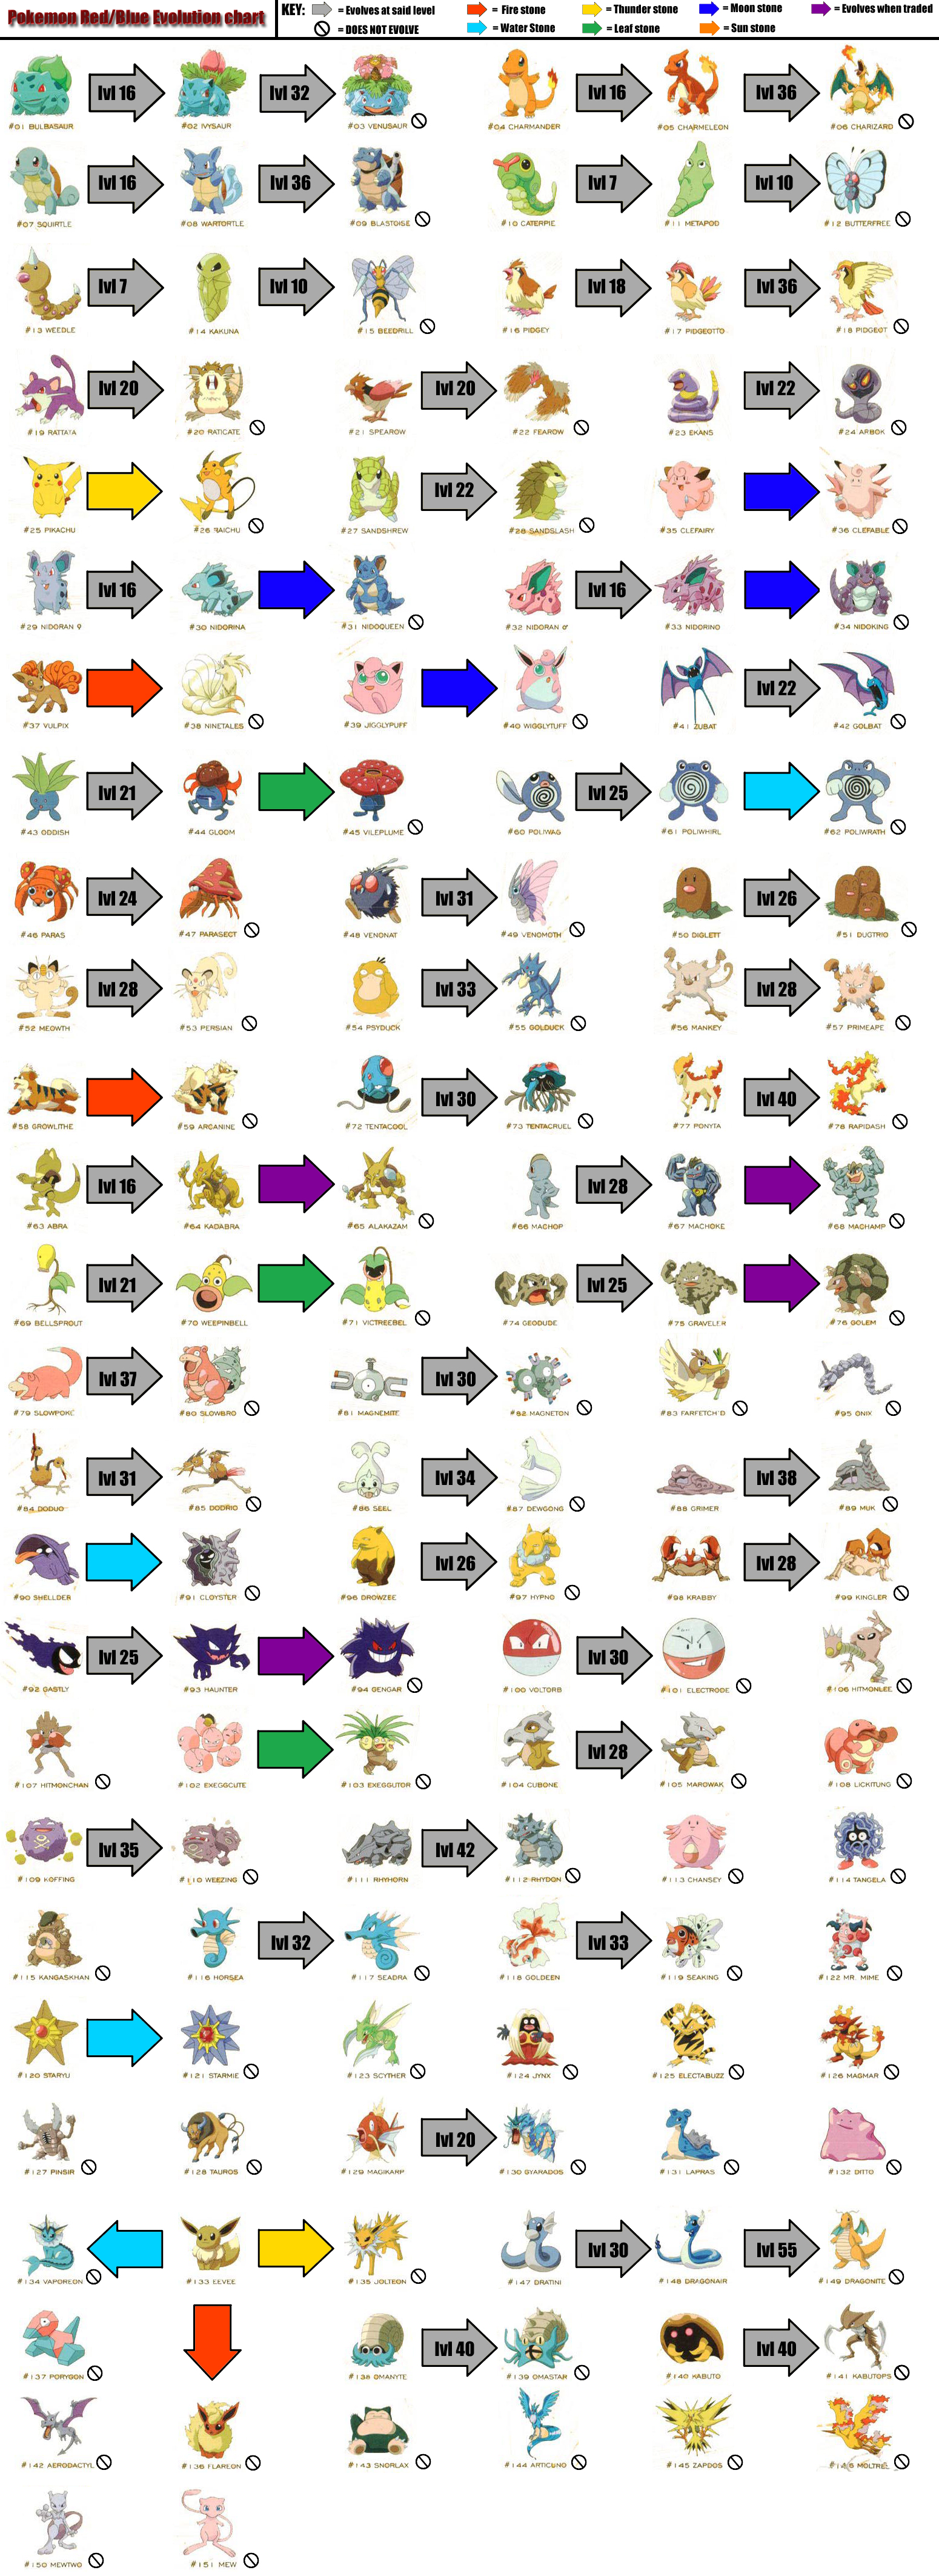 Pokemon Omega Ruby Evolution Chart